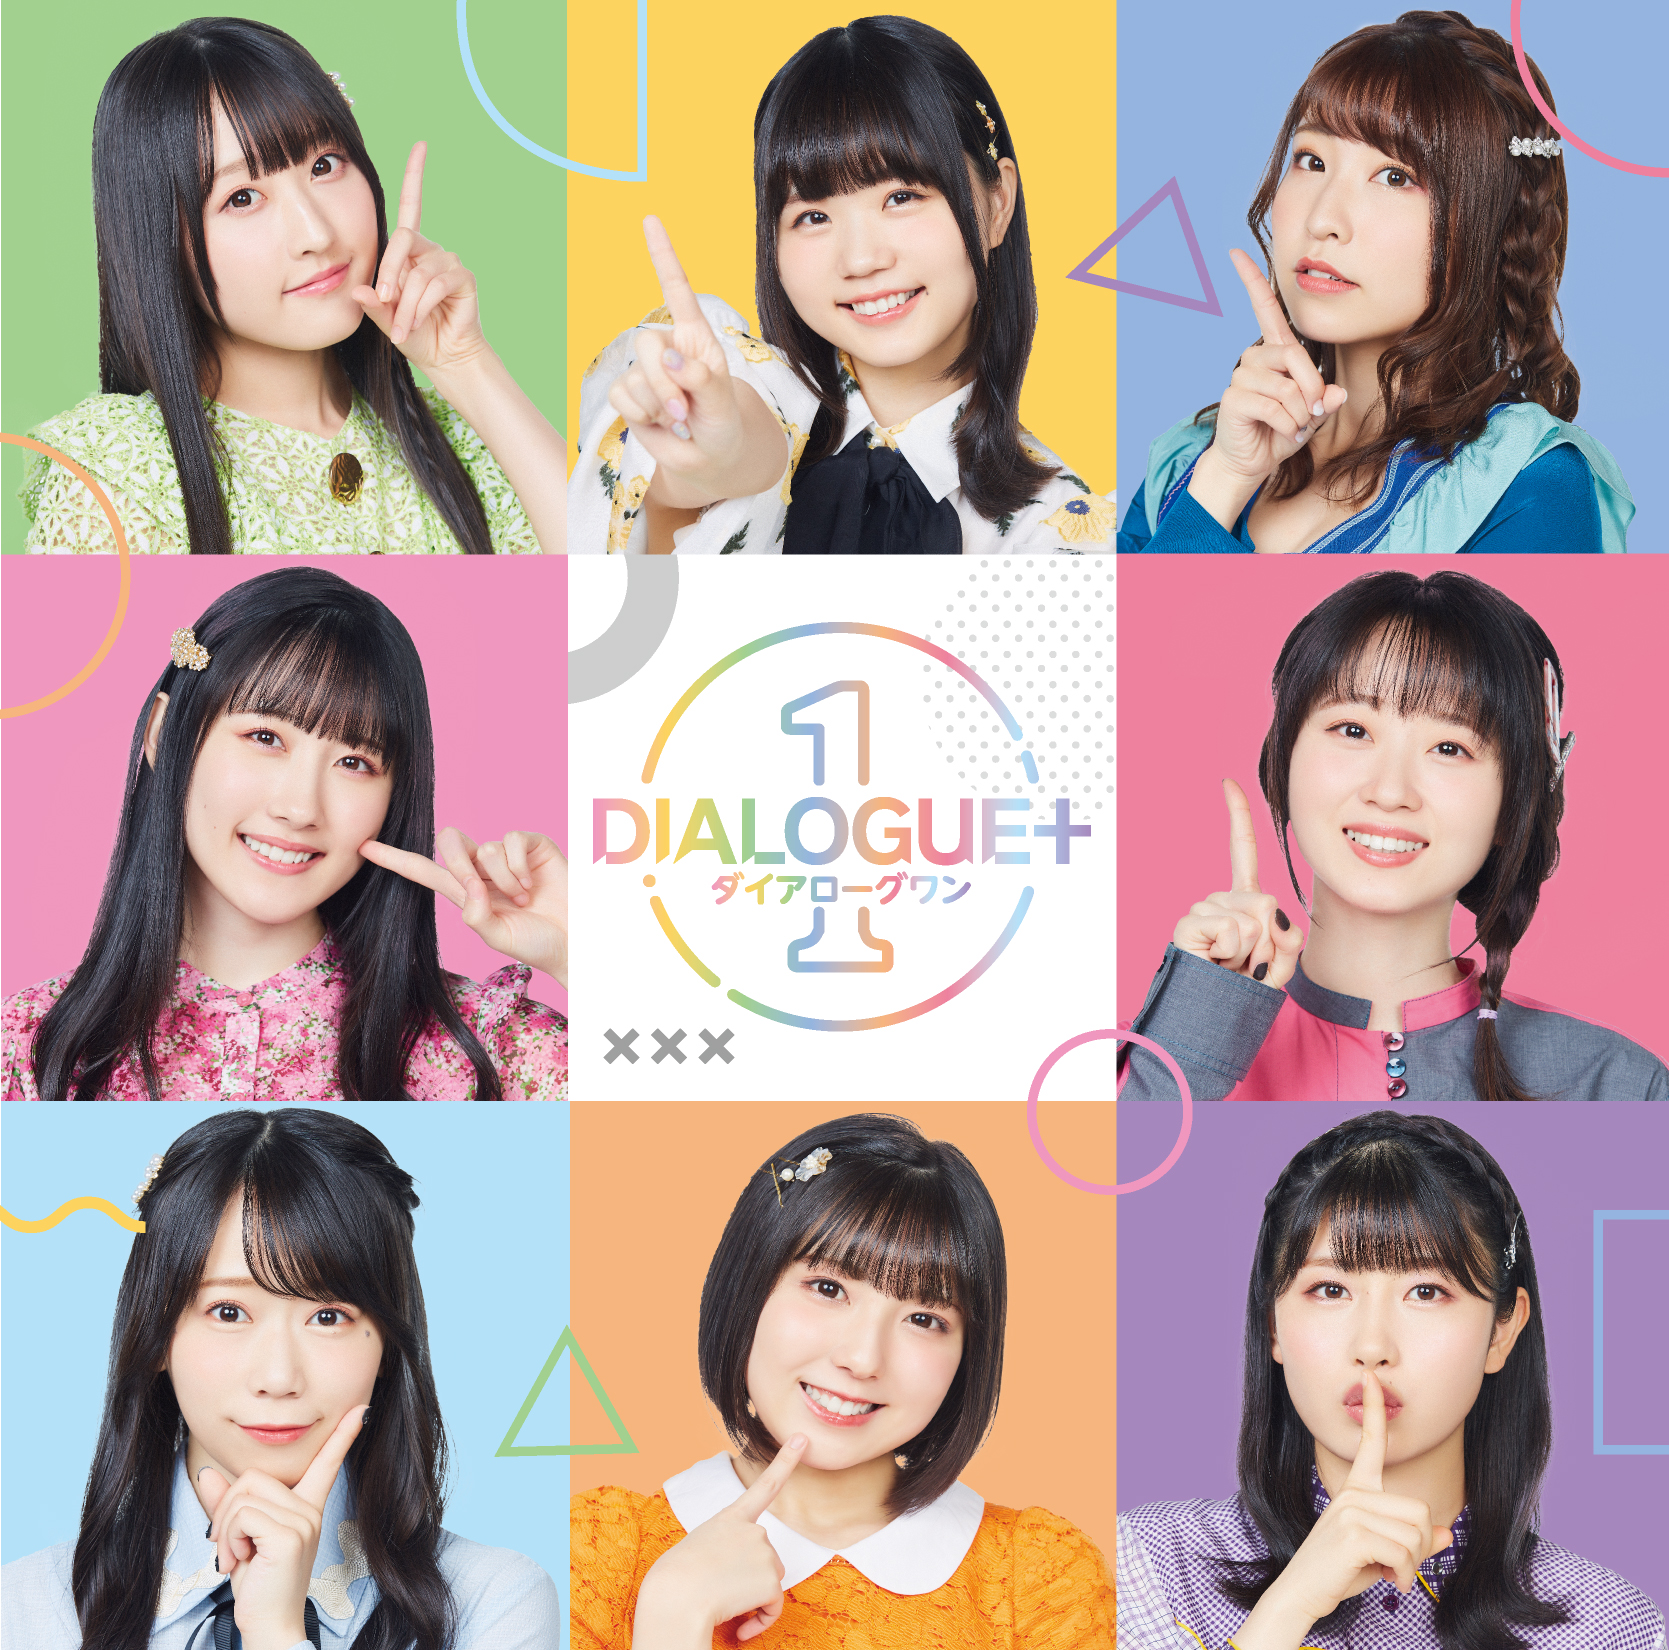 DIALOGUE+「DIALOGUE+1」きゃにめ限定盤（CD+Blu-ray+Instrumental CD